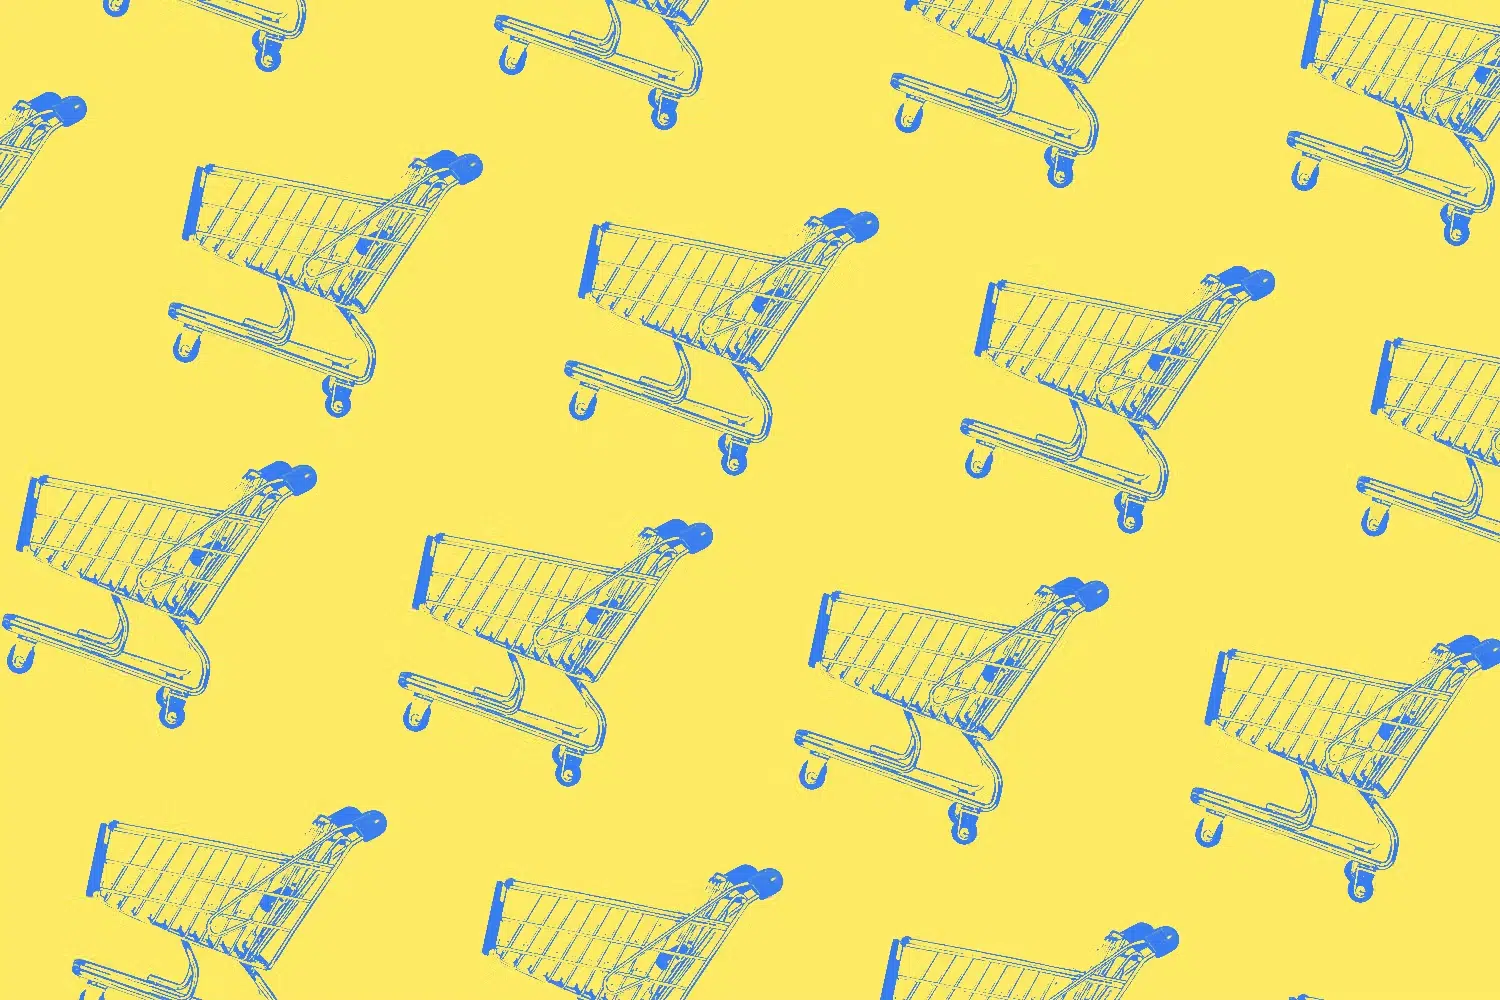 Shopping cart patterns